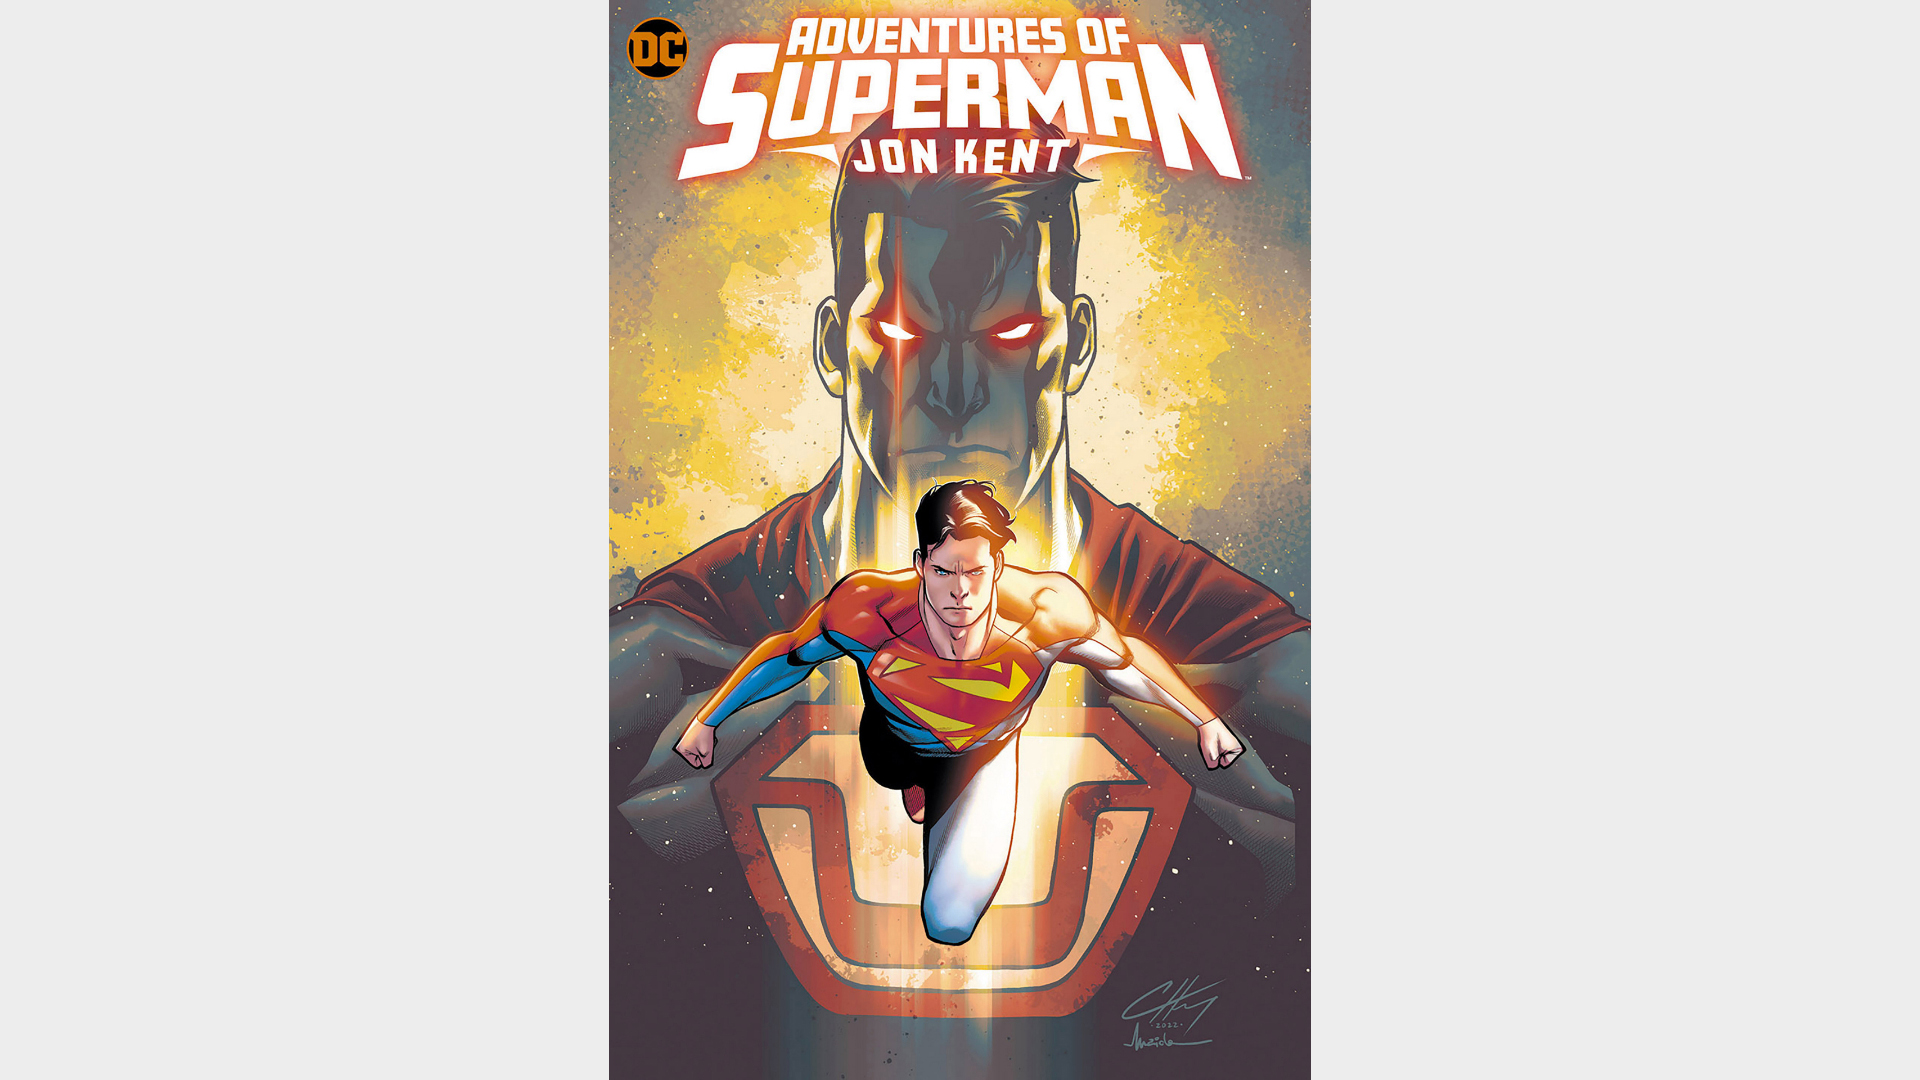 AVENTURAS DE SUPERMAN: JON KENT